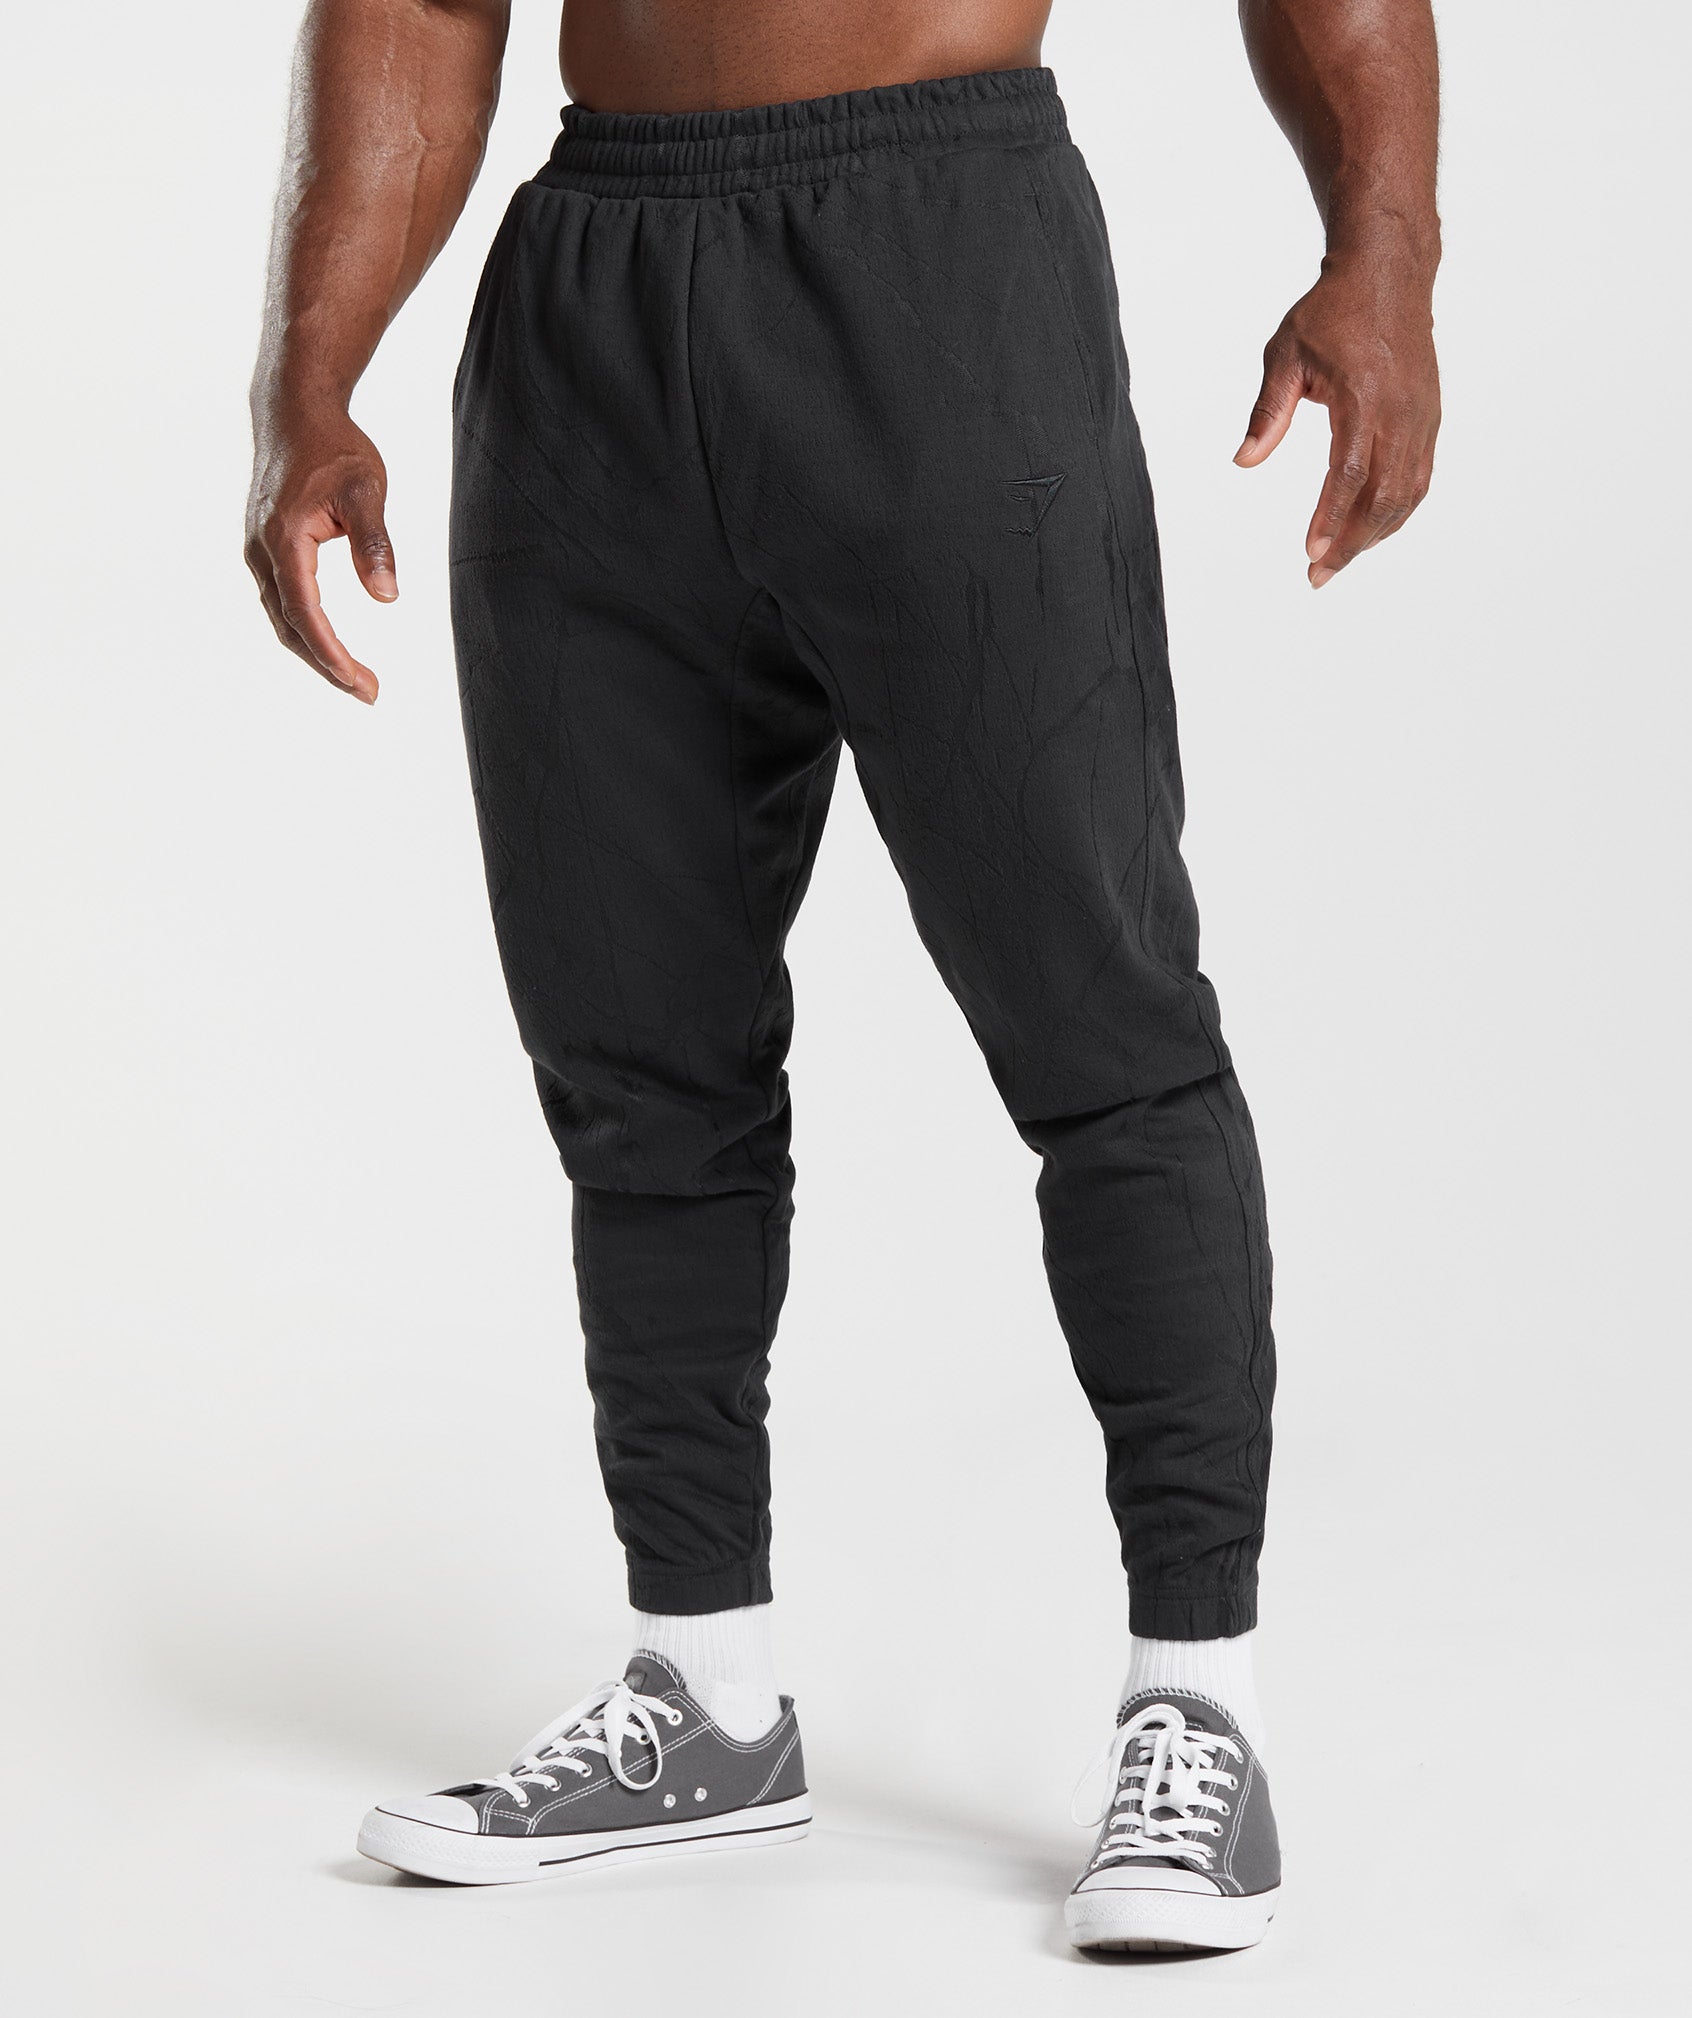 Gymshark Joggers Sweatpants, Men's Small Black, Ankle Zip & Pockets, Logo